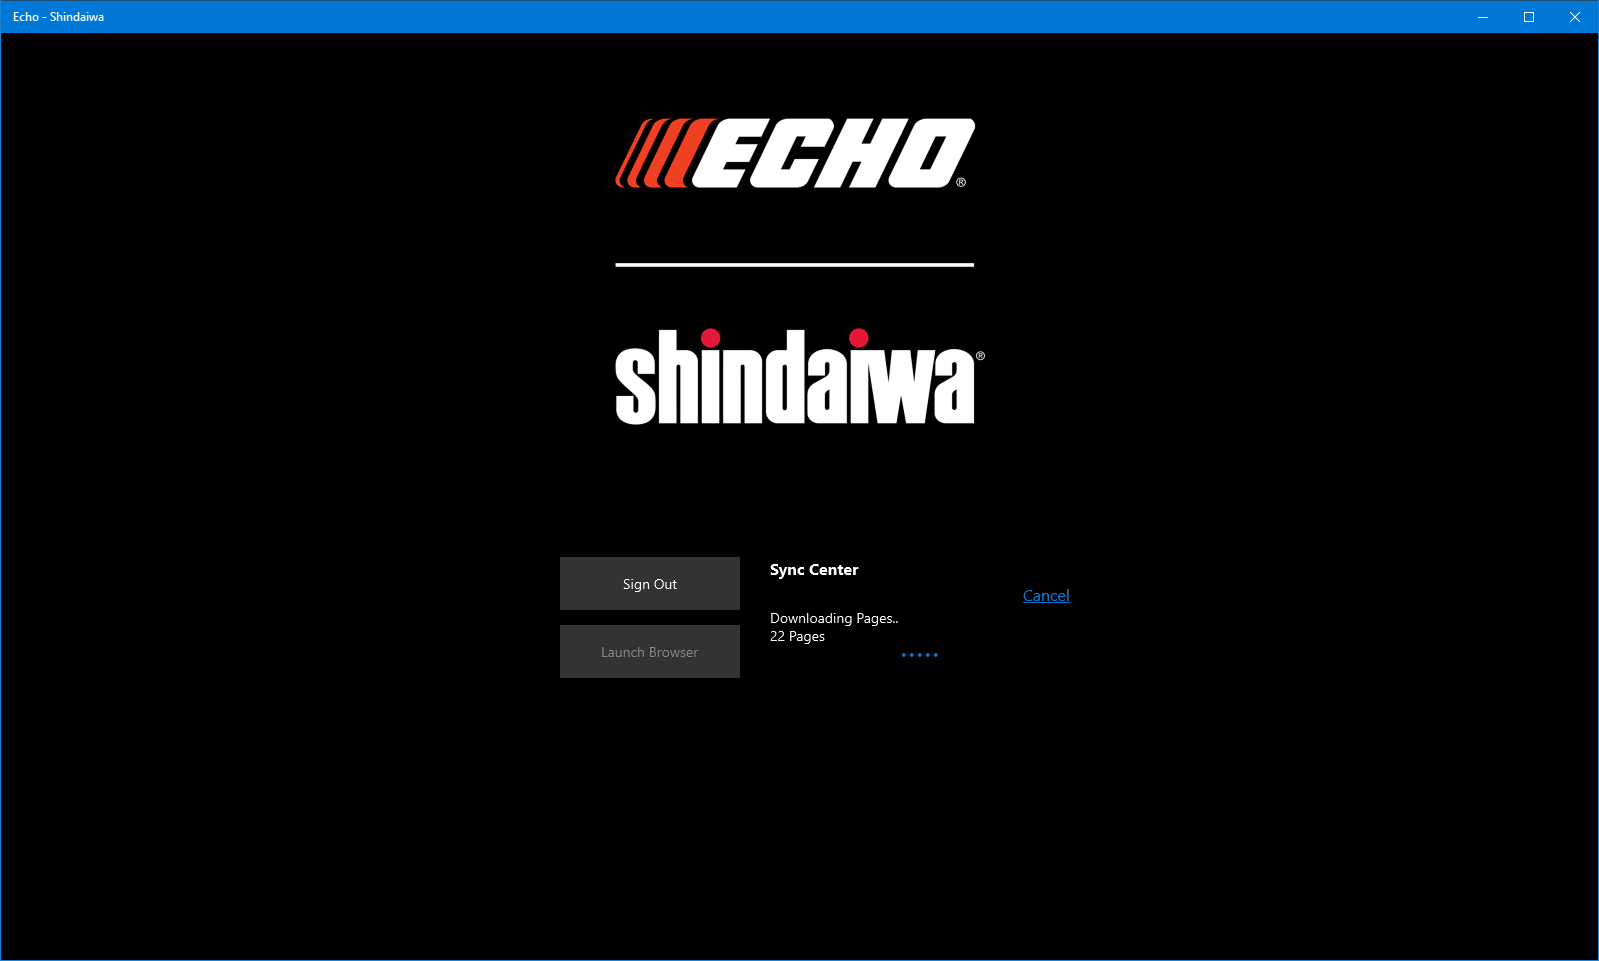 Echo - Shindaiwa